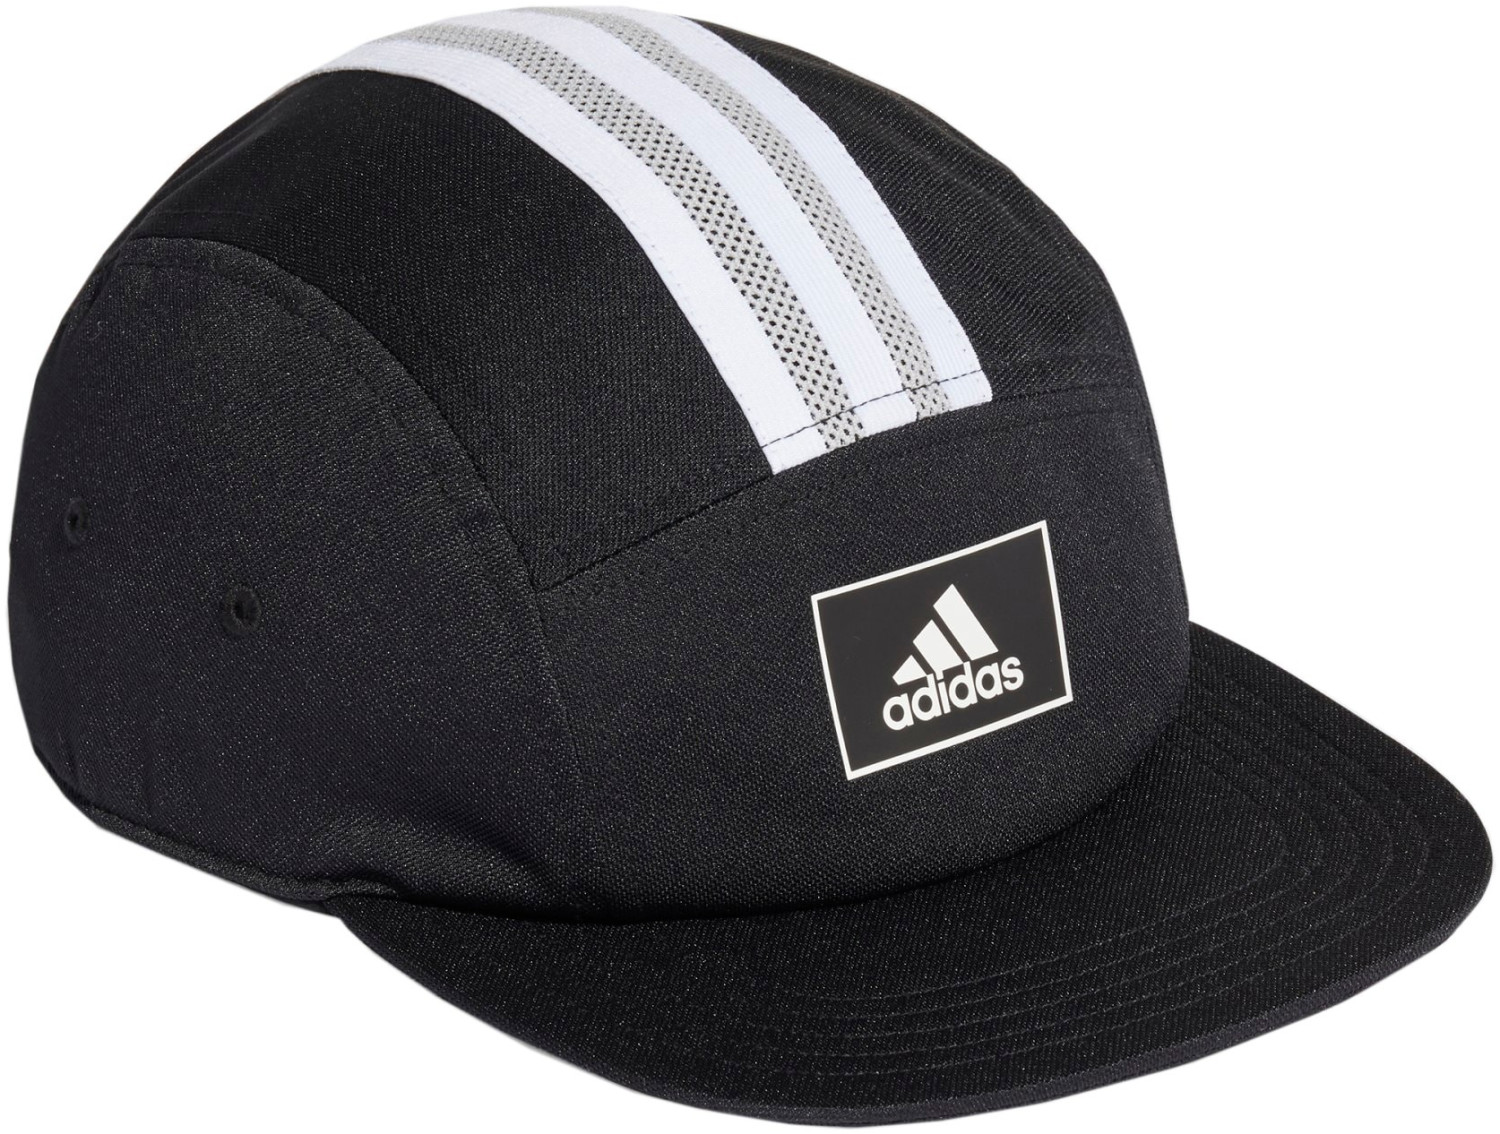 Adidas Five-Panel Adidas Athletics Club Cap black/white/grey two